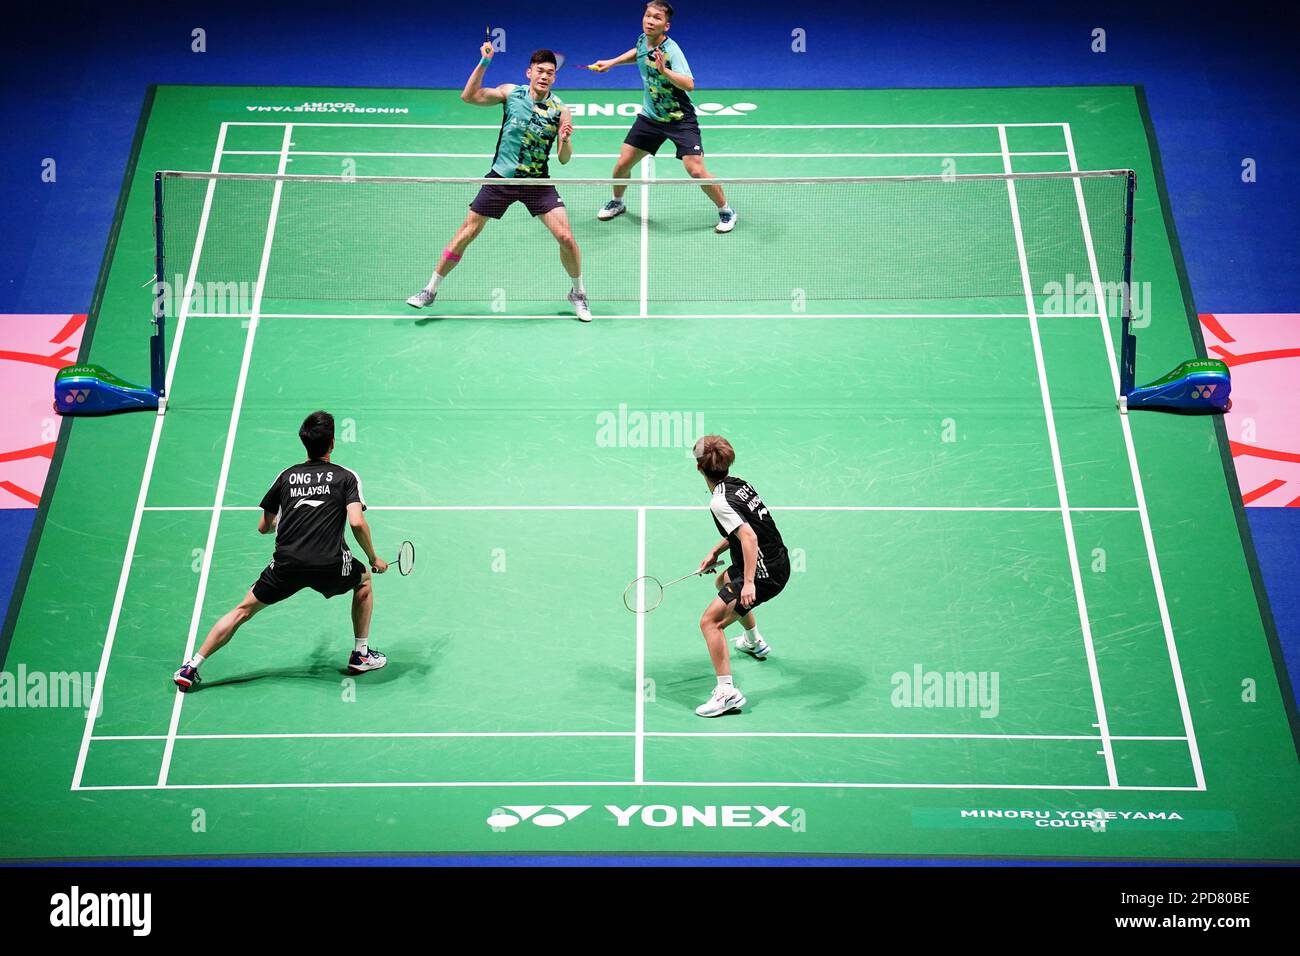 badminton court 1 live